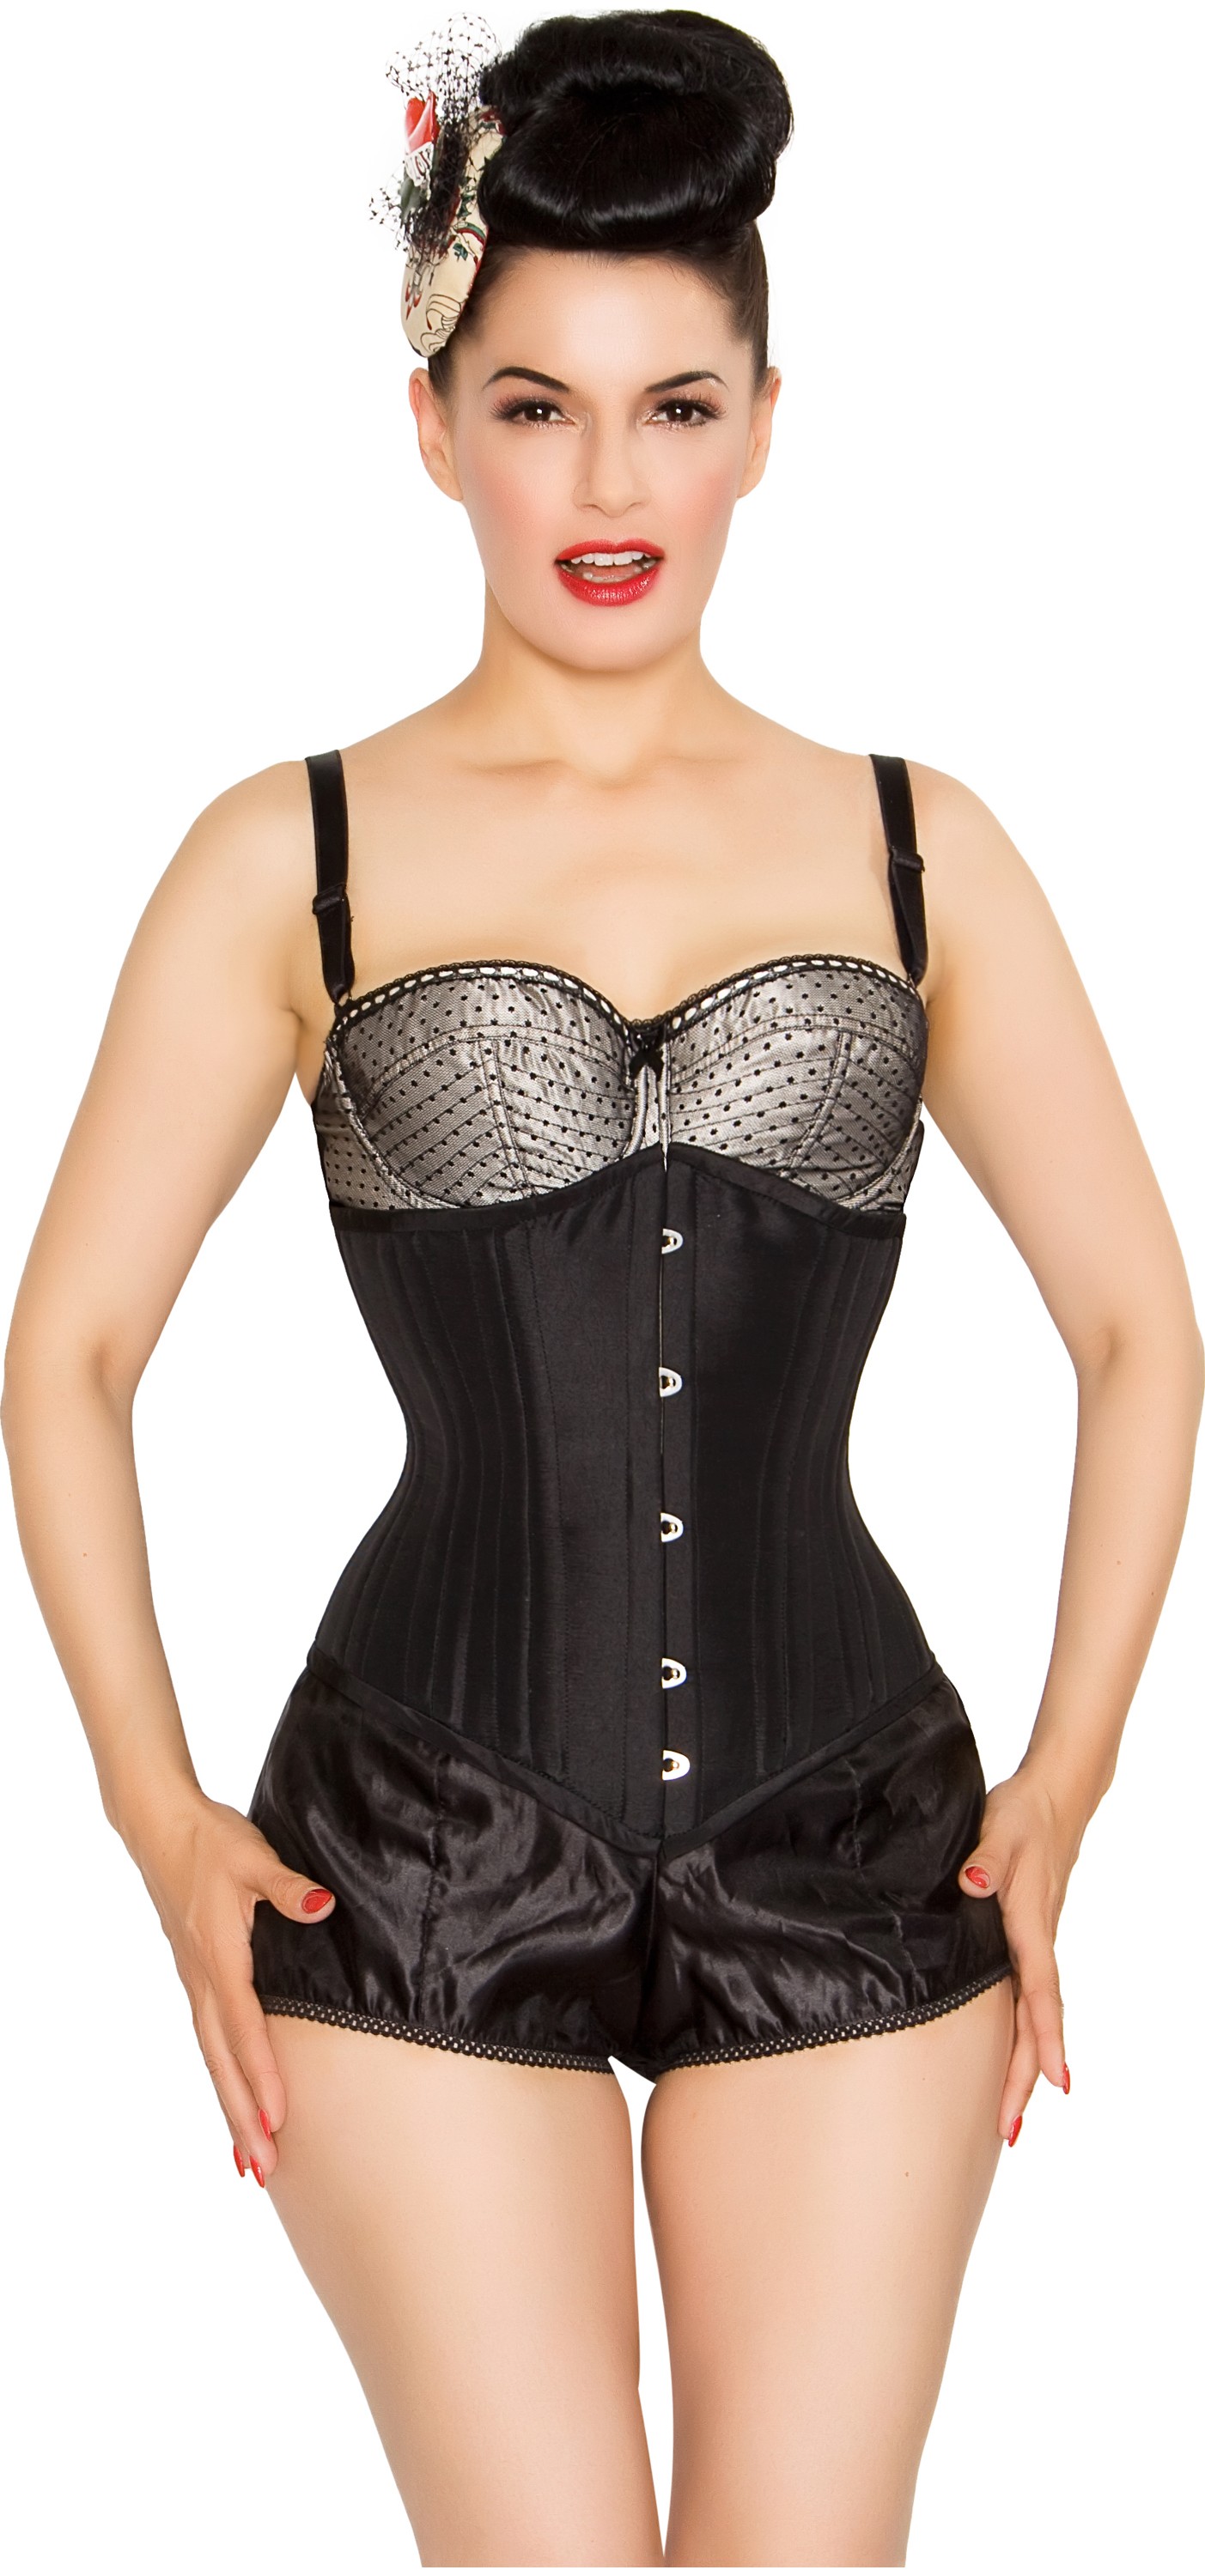 waist training corsets waist training long corset cincher in black UOTUMZG